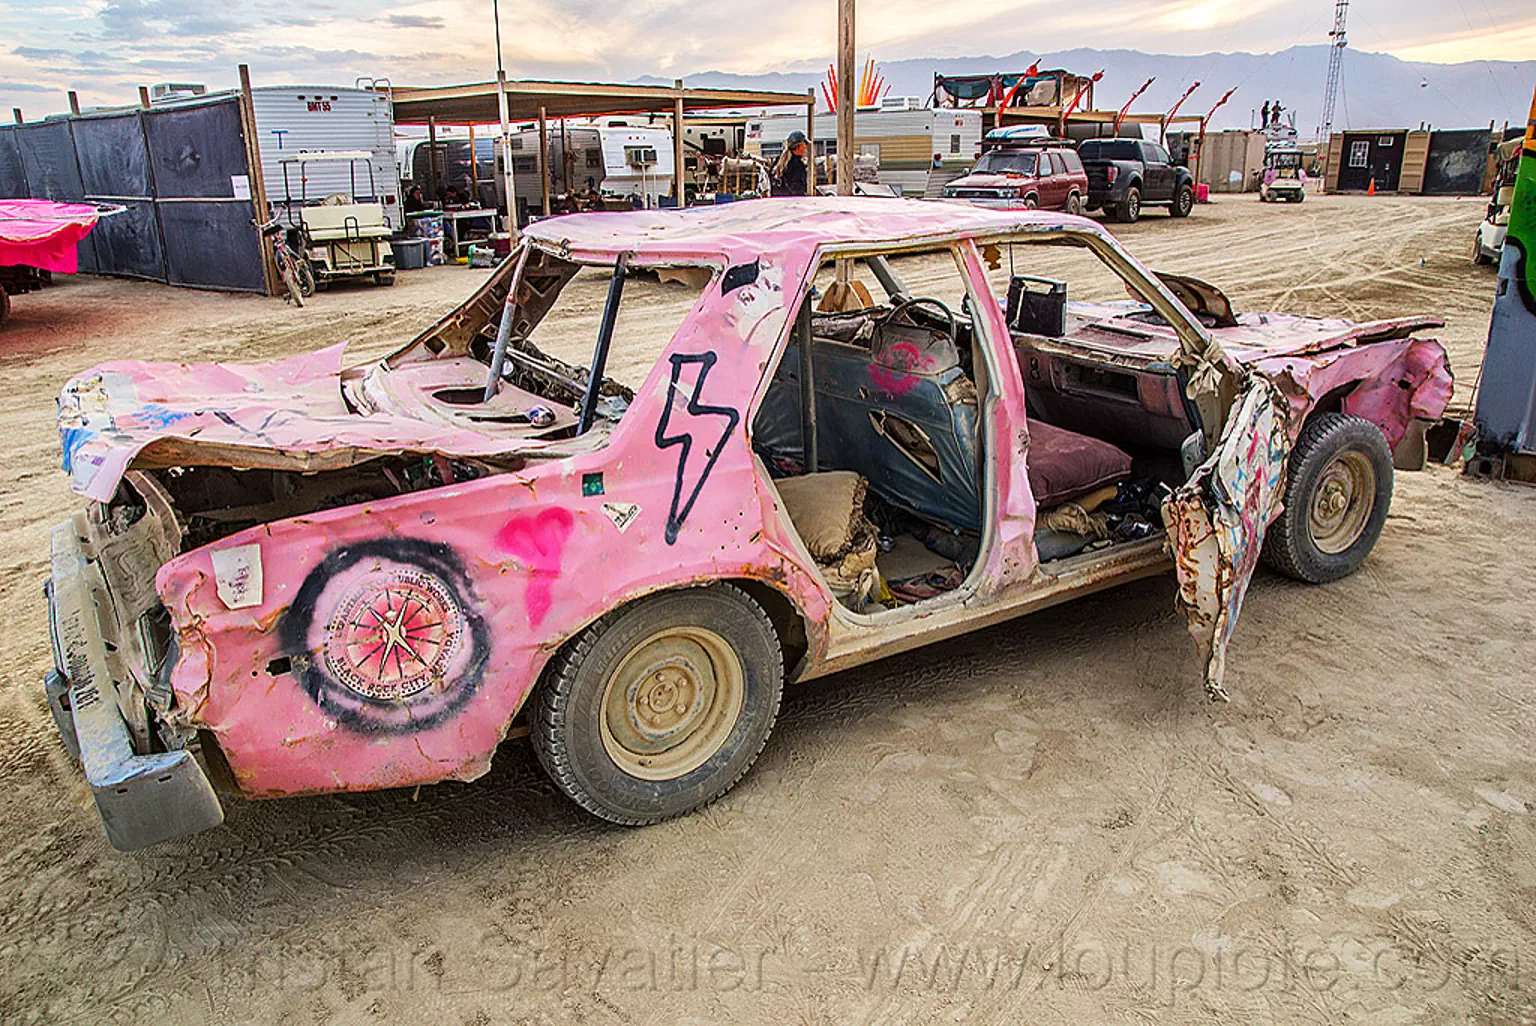 burning man - DPW wrecked pink car, art car, burning man art cars, mutant vehicles, pink car, wreck